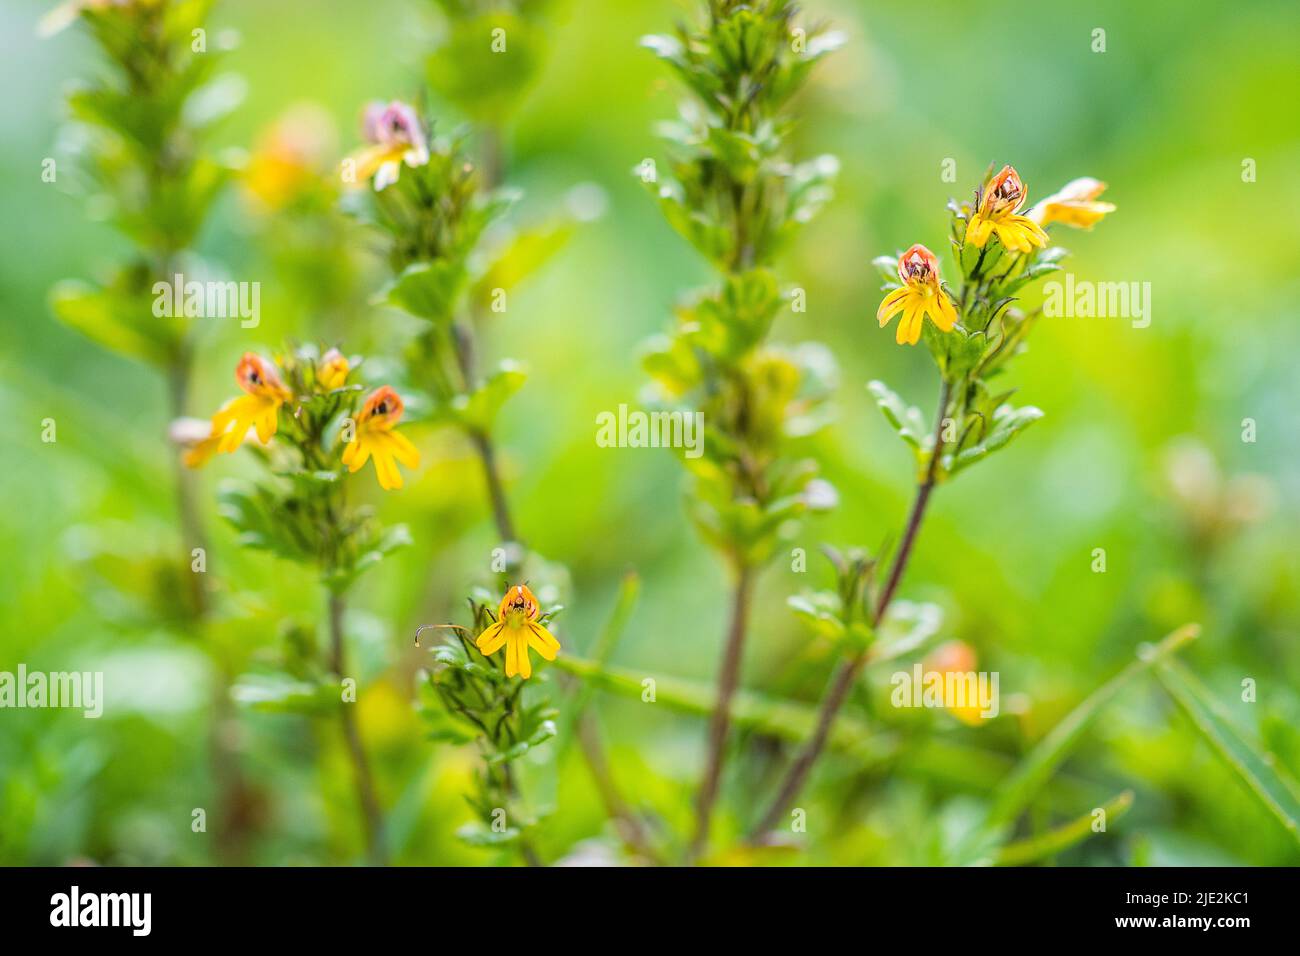 Dwarf eyebright, Euphrasia minima, is a plant from the genus Euphrasia, in the family Orobanchaceae. Stock Photo